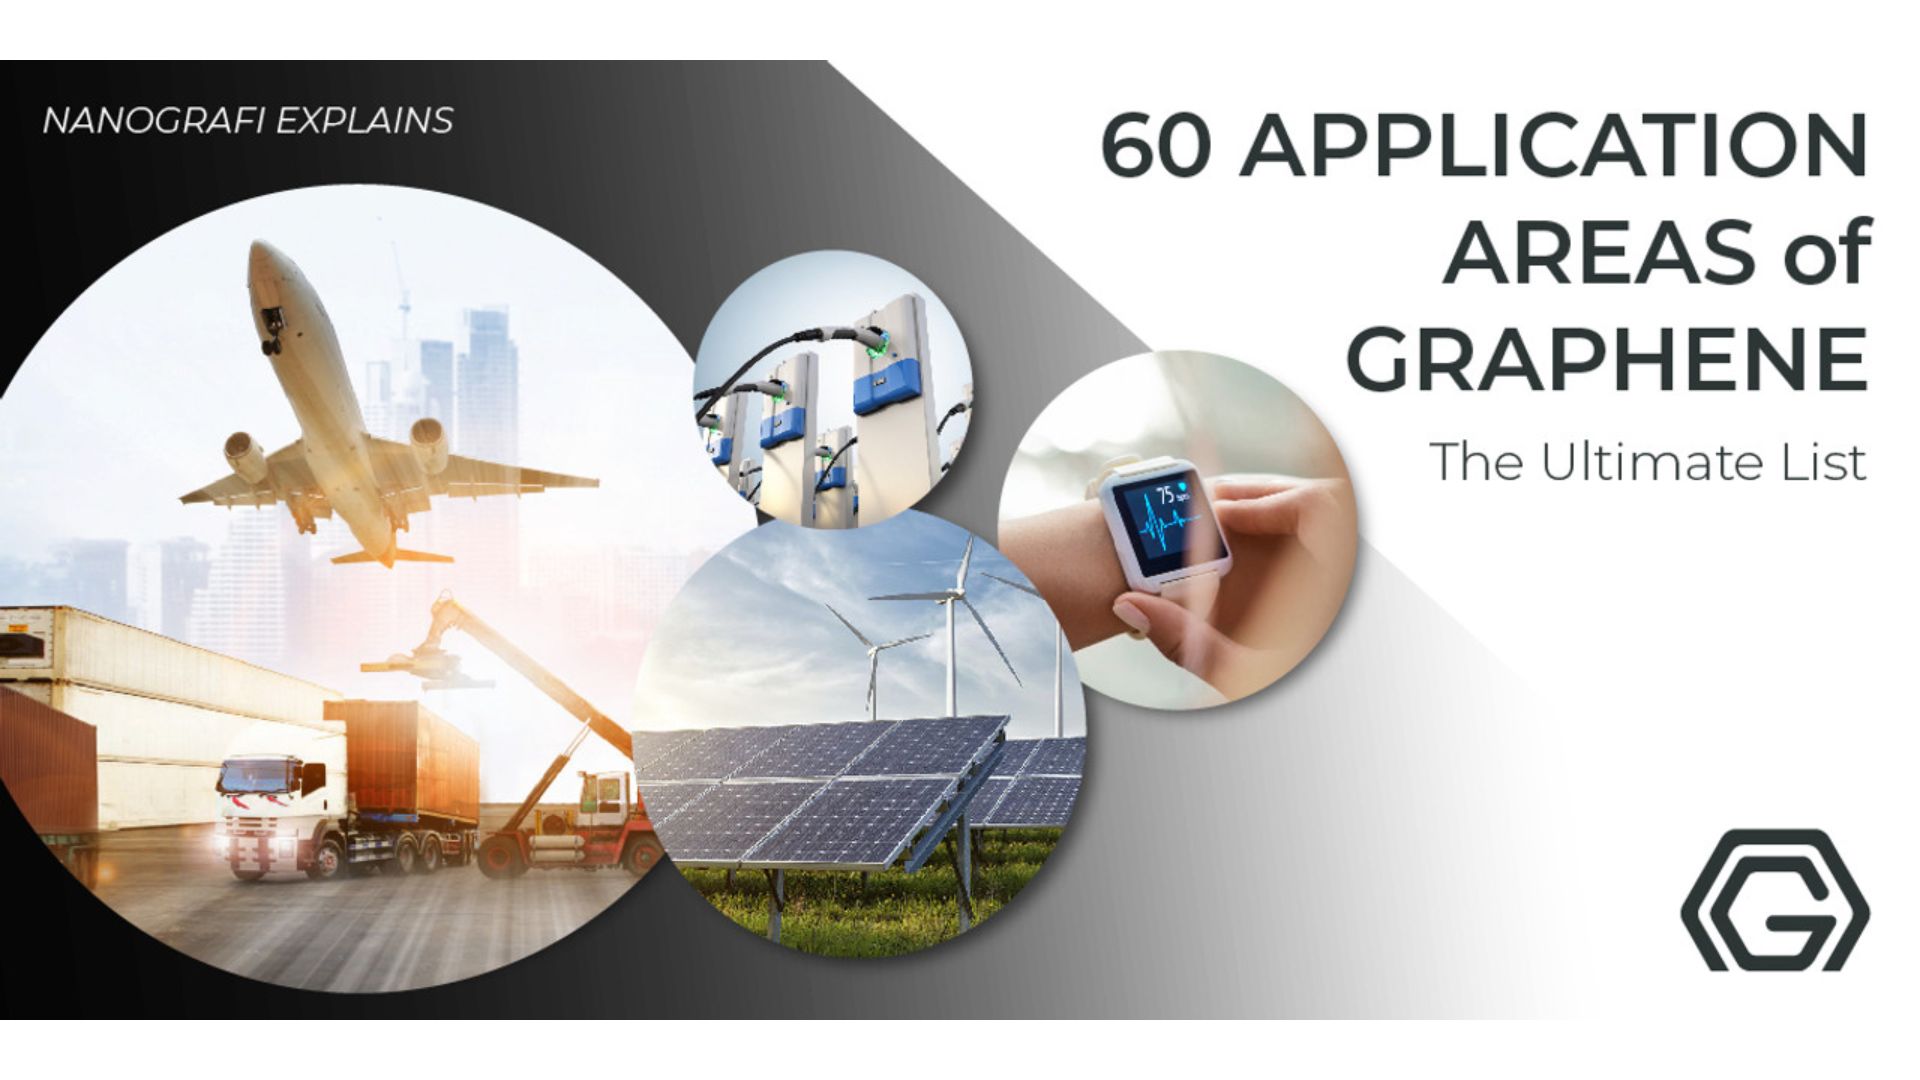 60 Uses of Graphene